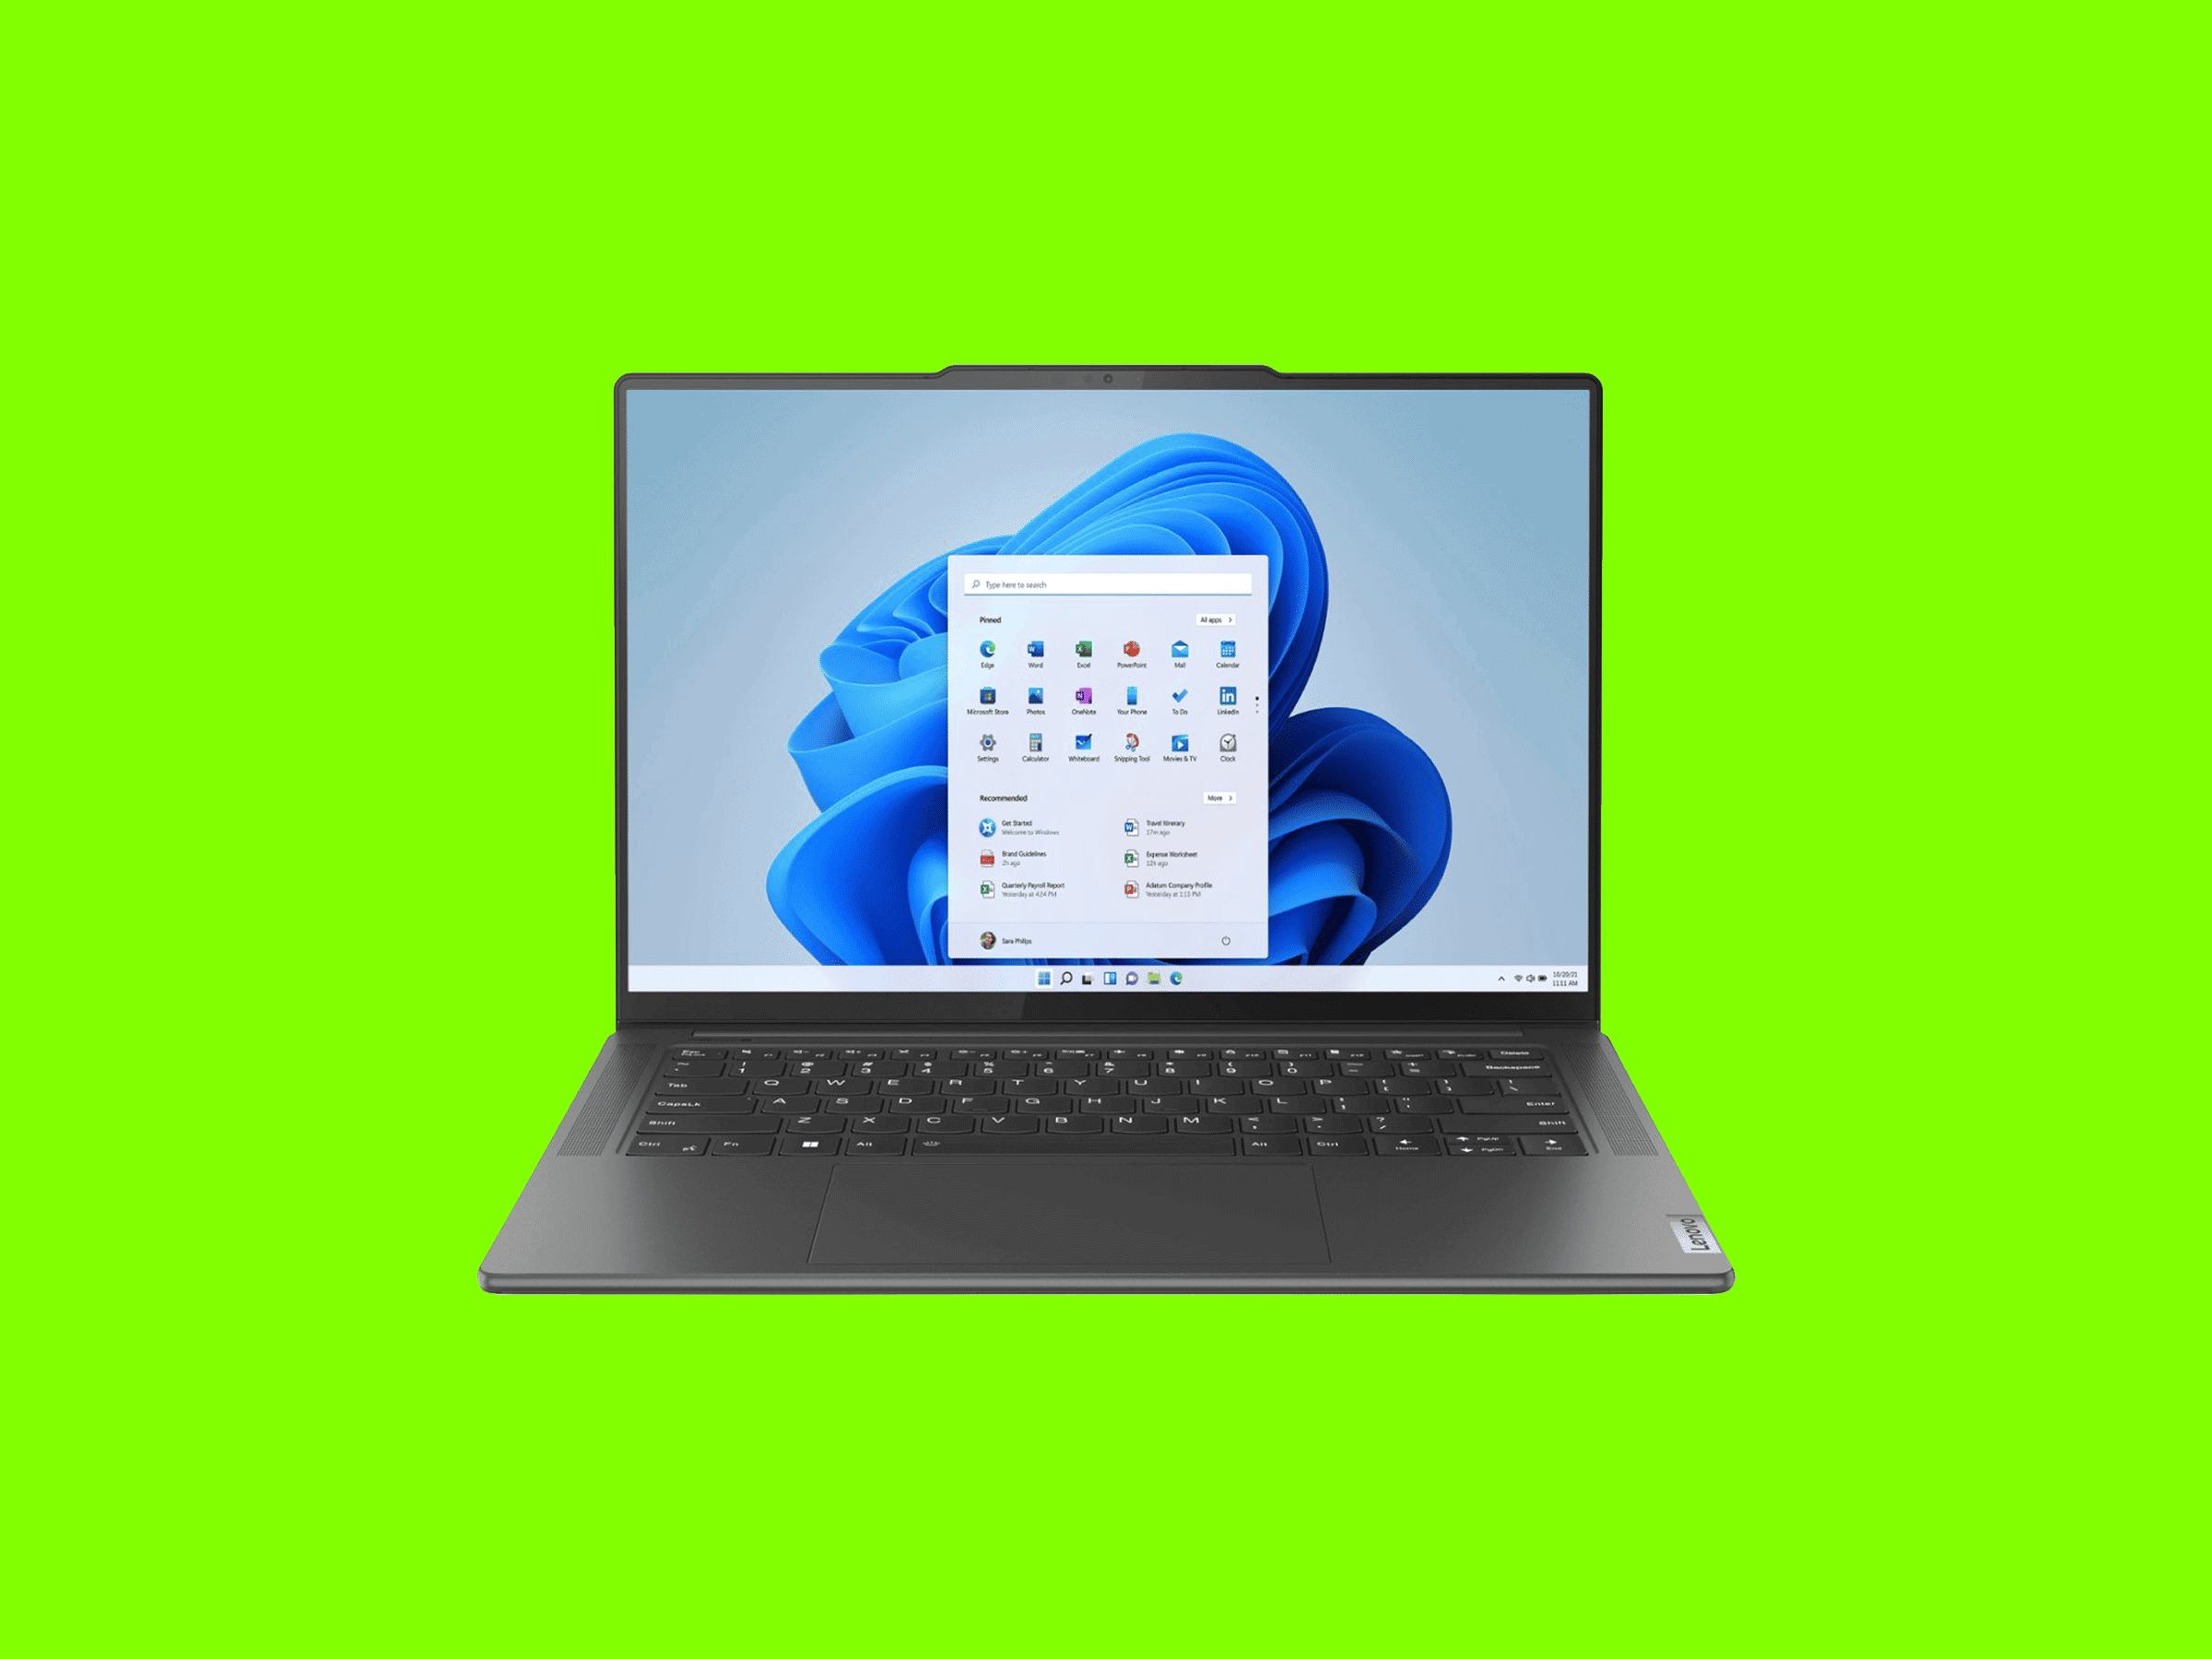 Lenovo Slim Pro 9i (14.5-Inch, Gen 8) Review: A Powerful Laptop